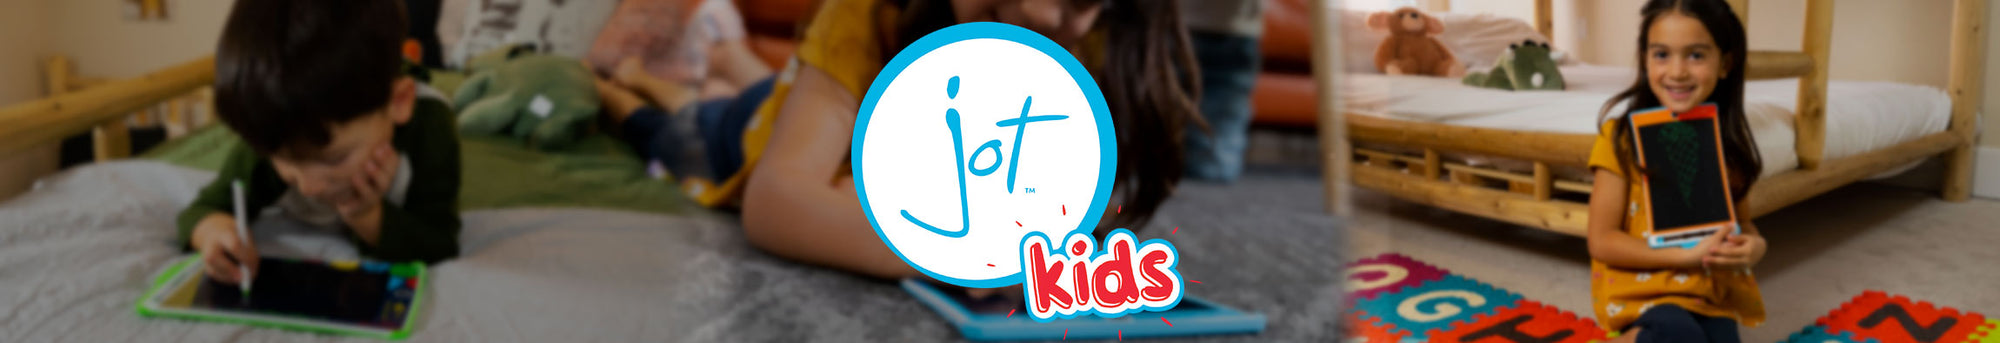 Jot Kids - Image of various kids writing and displaying Jot Kids Tablets